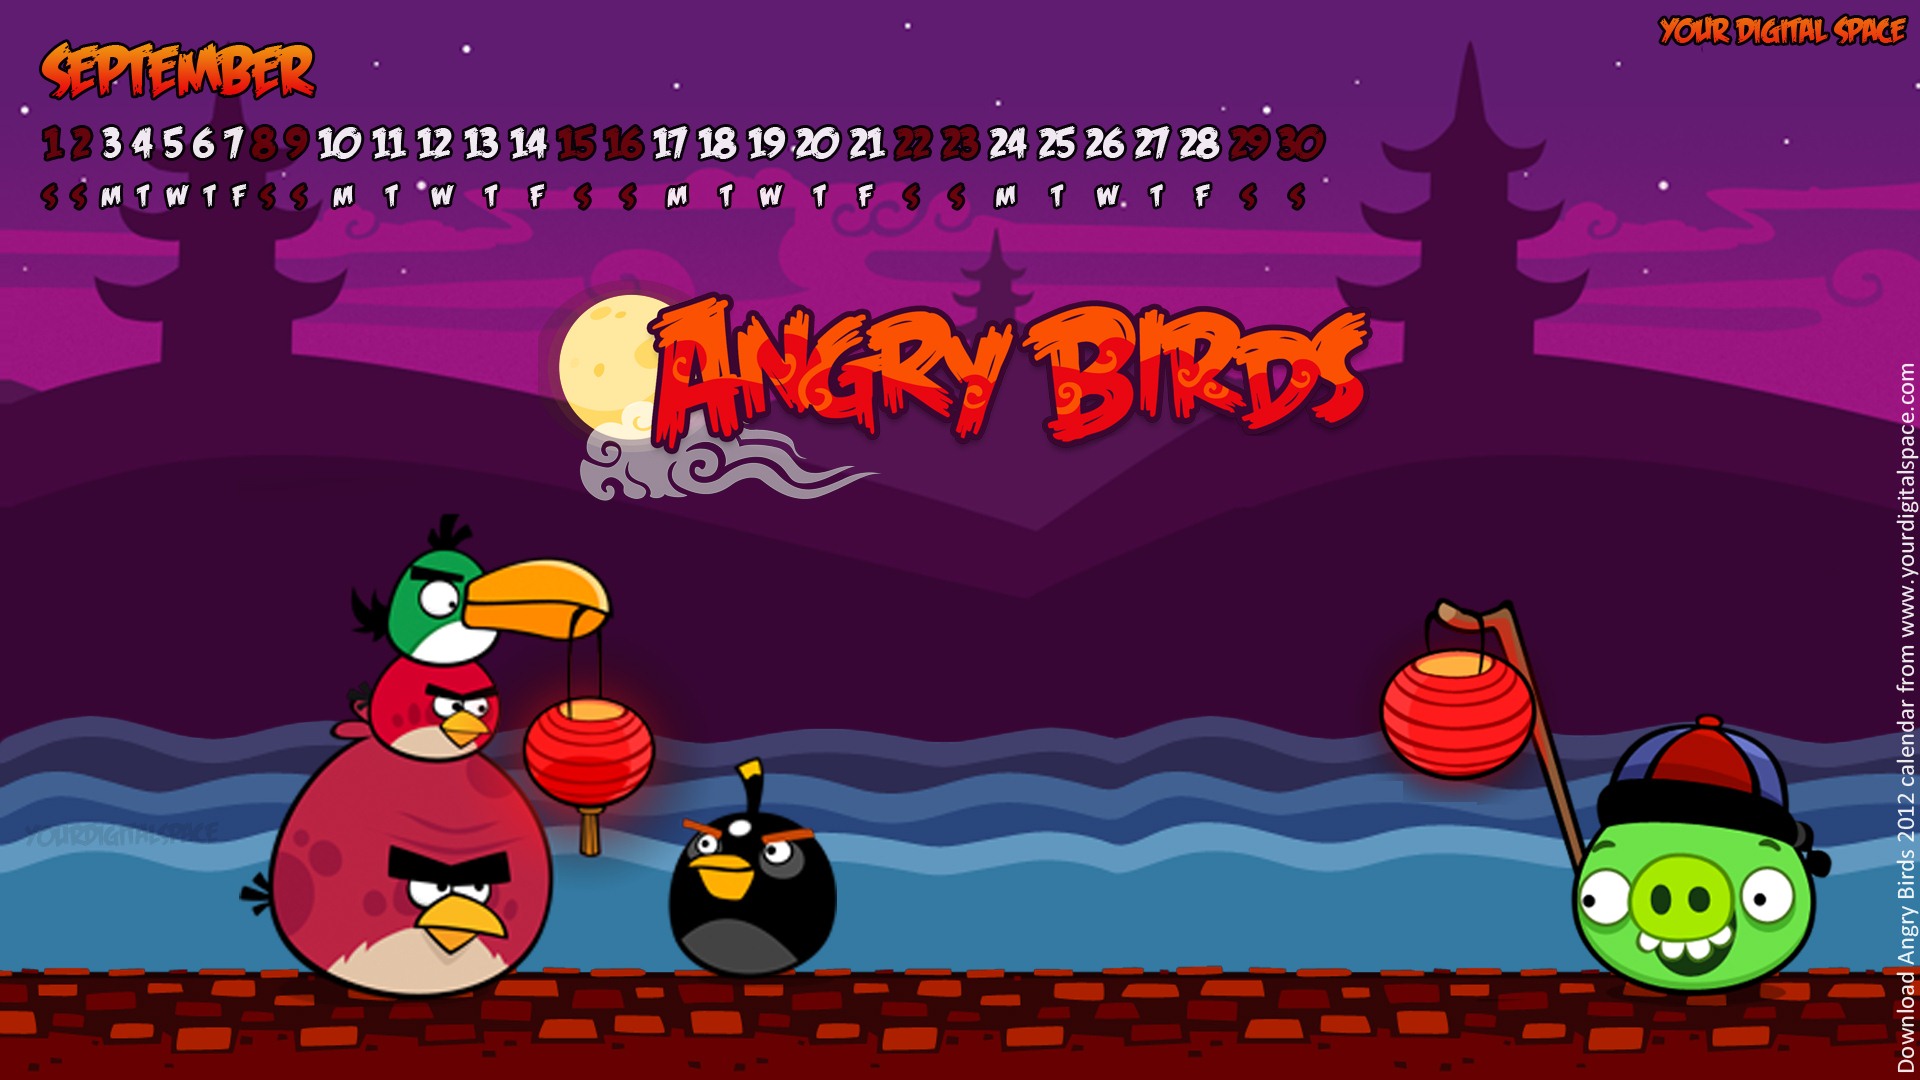 Angry Birds 愤怒的小鸟 2012年年历壁纸12 - 1920x1080